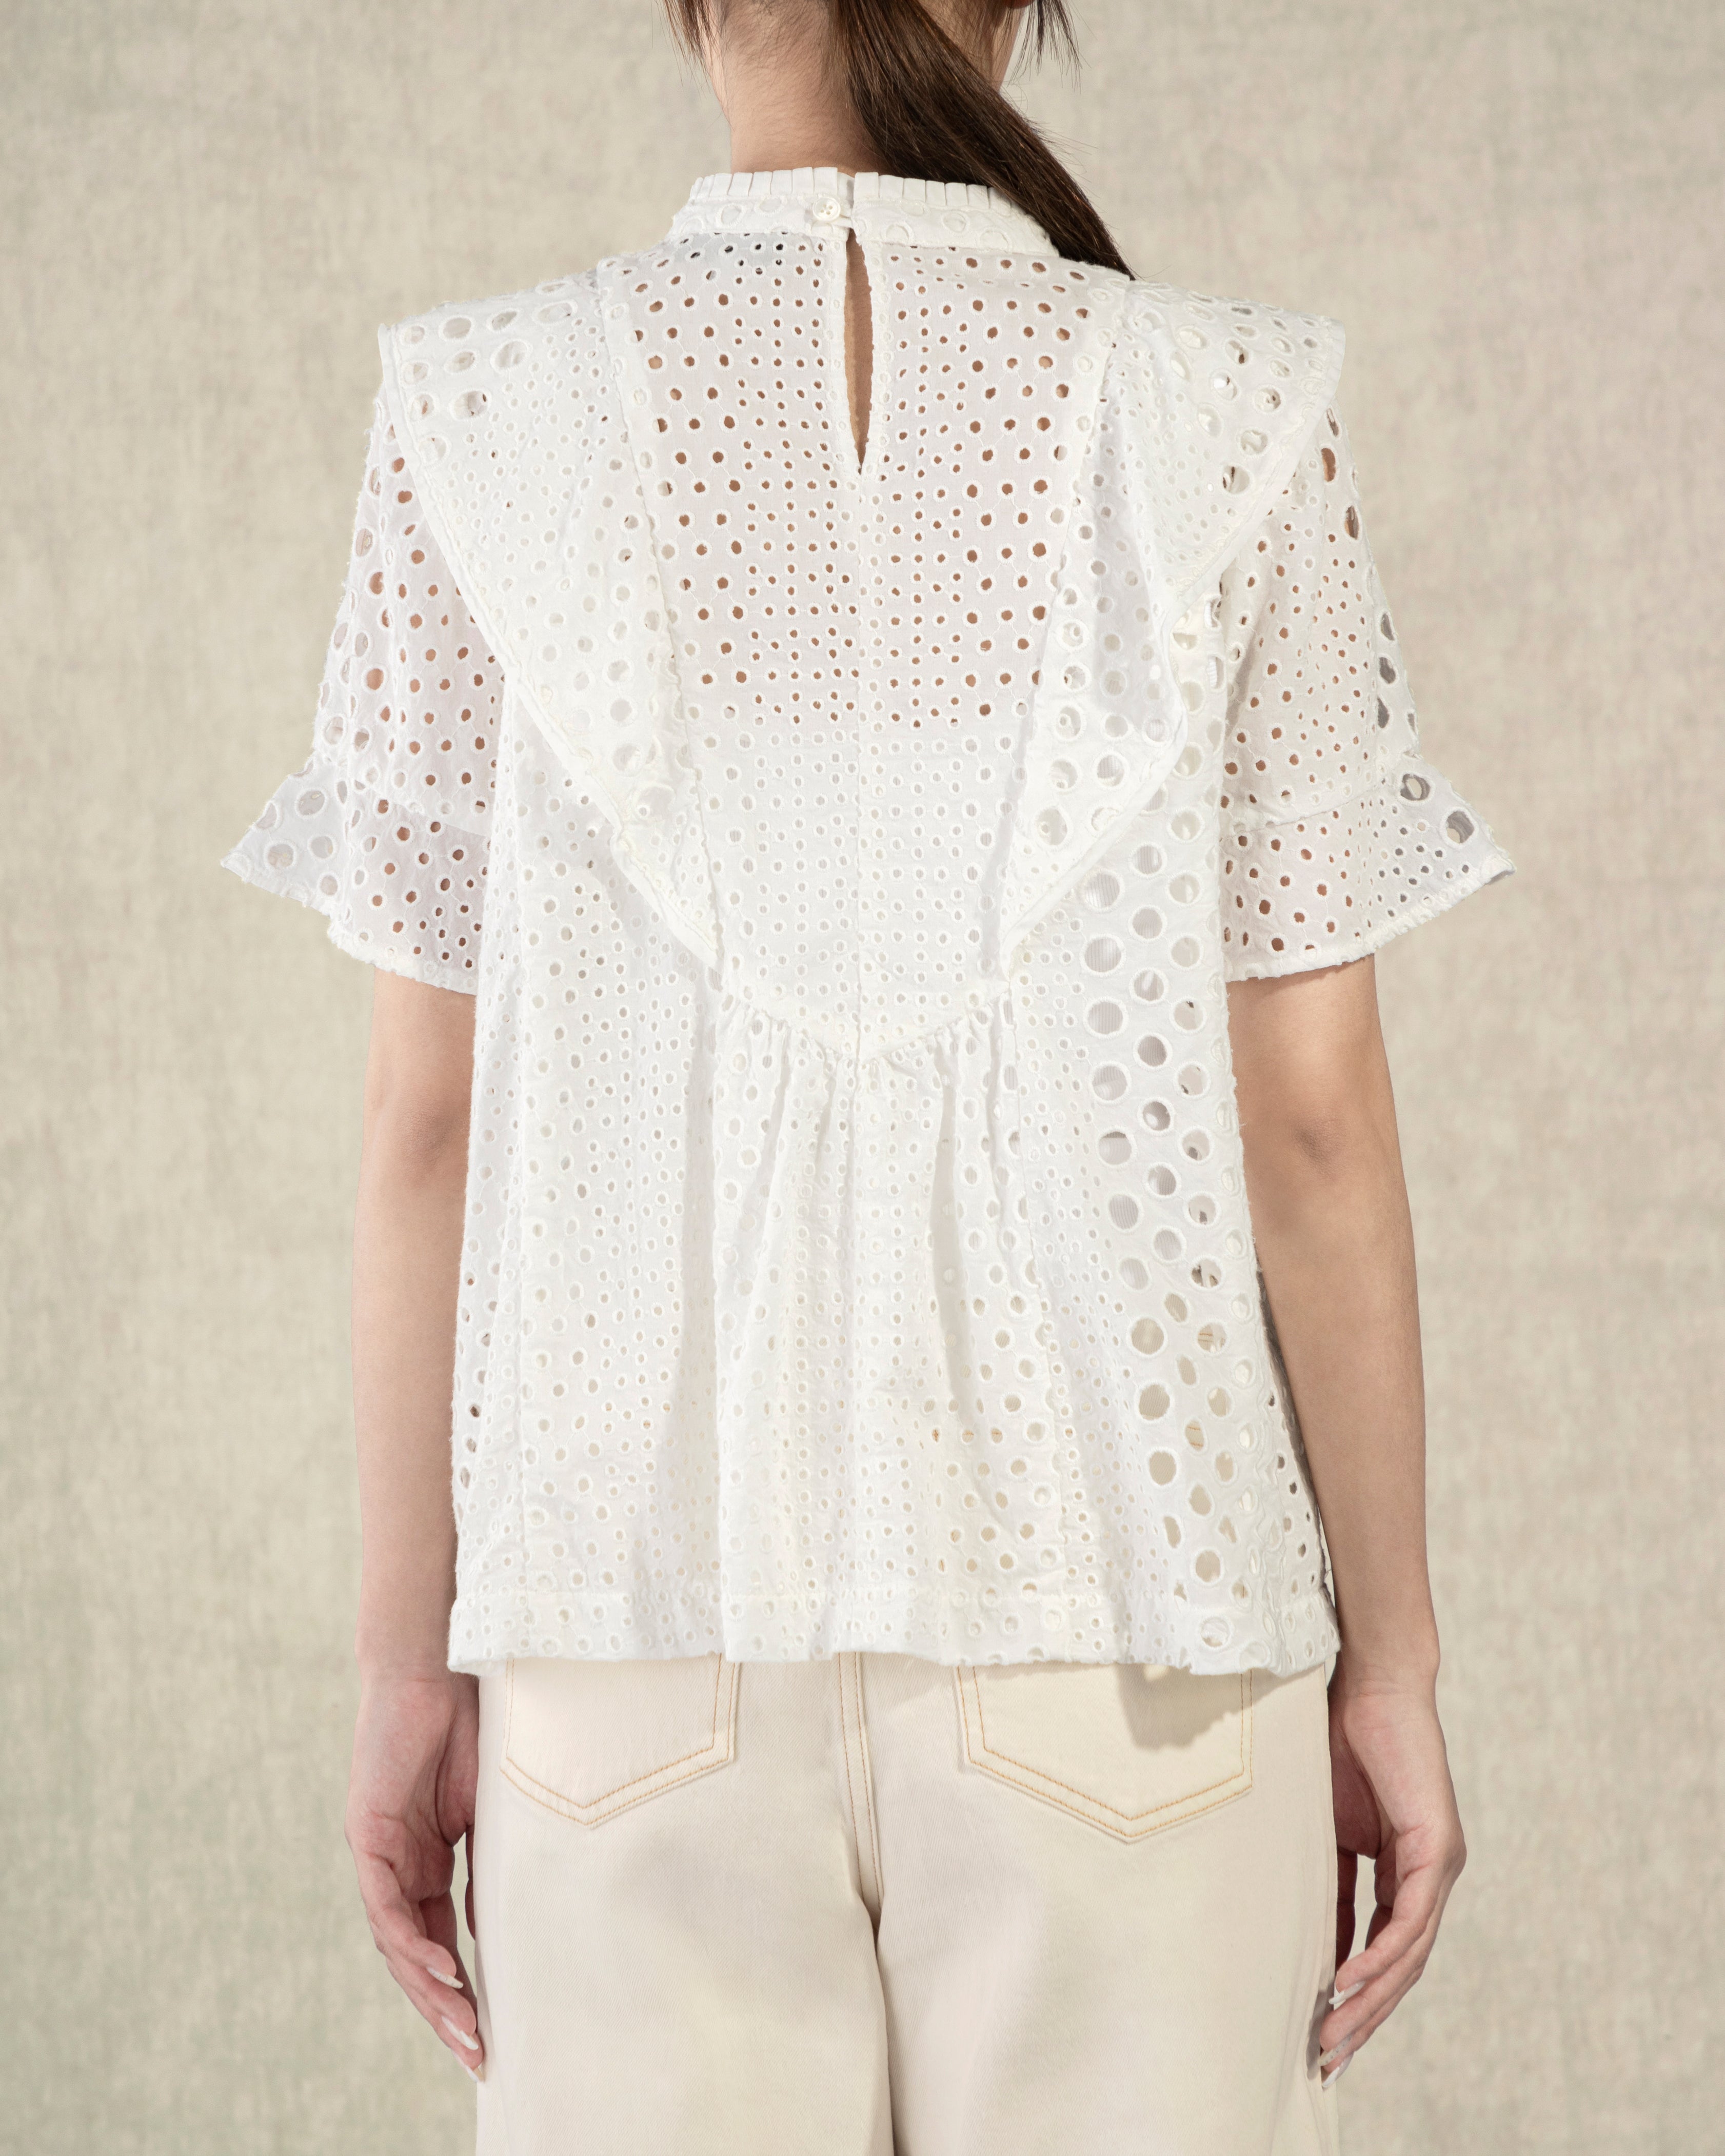 Pure White Lace Ruffled Eyelet Blouse Womens Future Classics Textured Lightweight Shirt